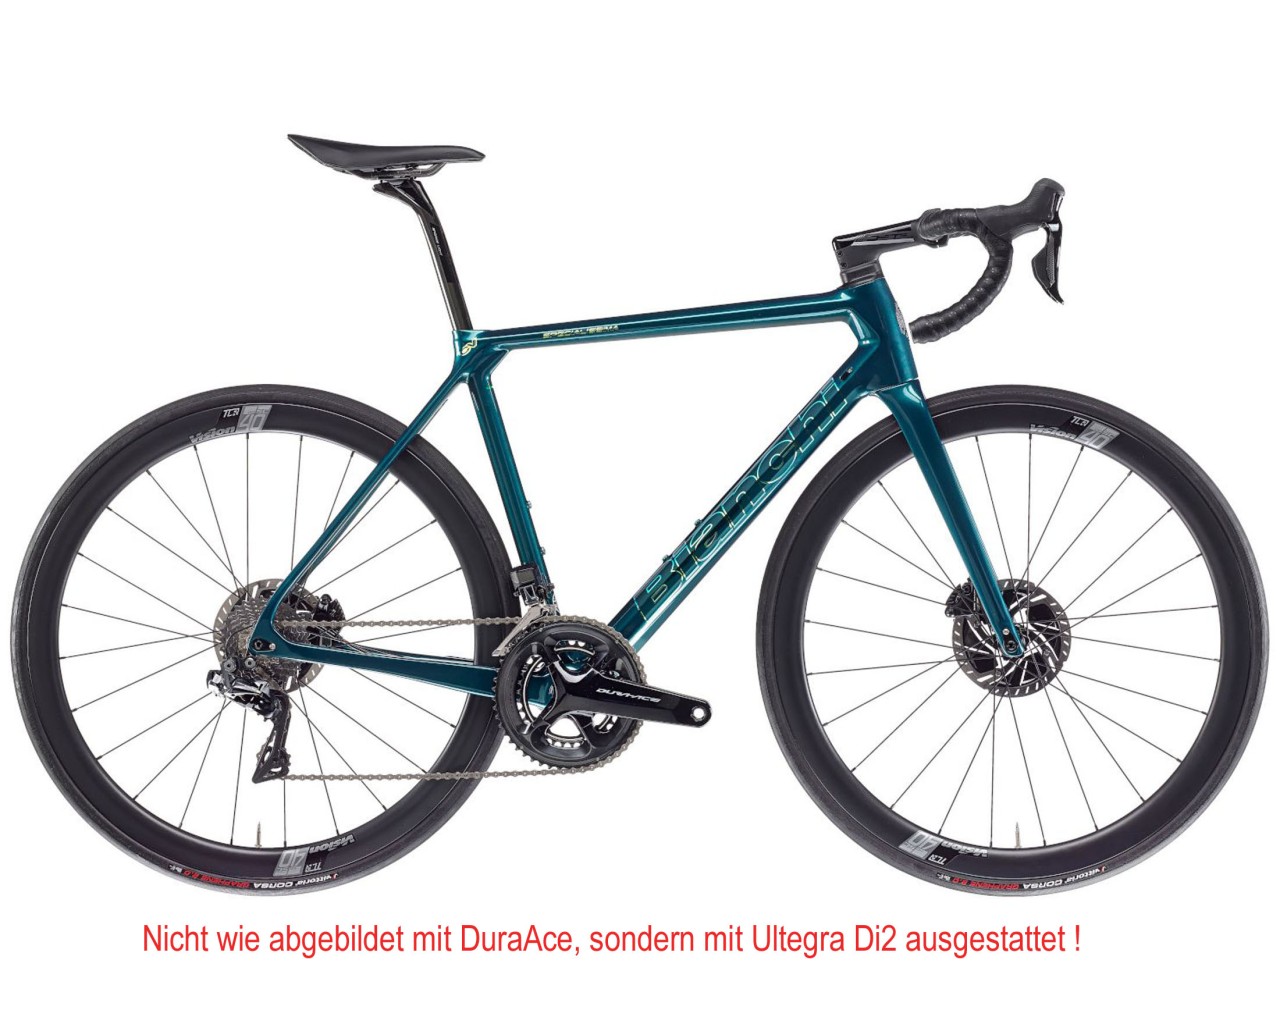 Bianchi Specialissima Disc Ultegra Di2 2x11-speed - Carbon Road Bike 2022 | greenish blue